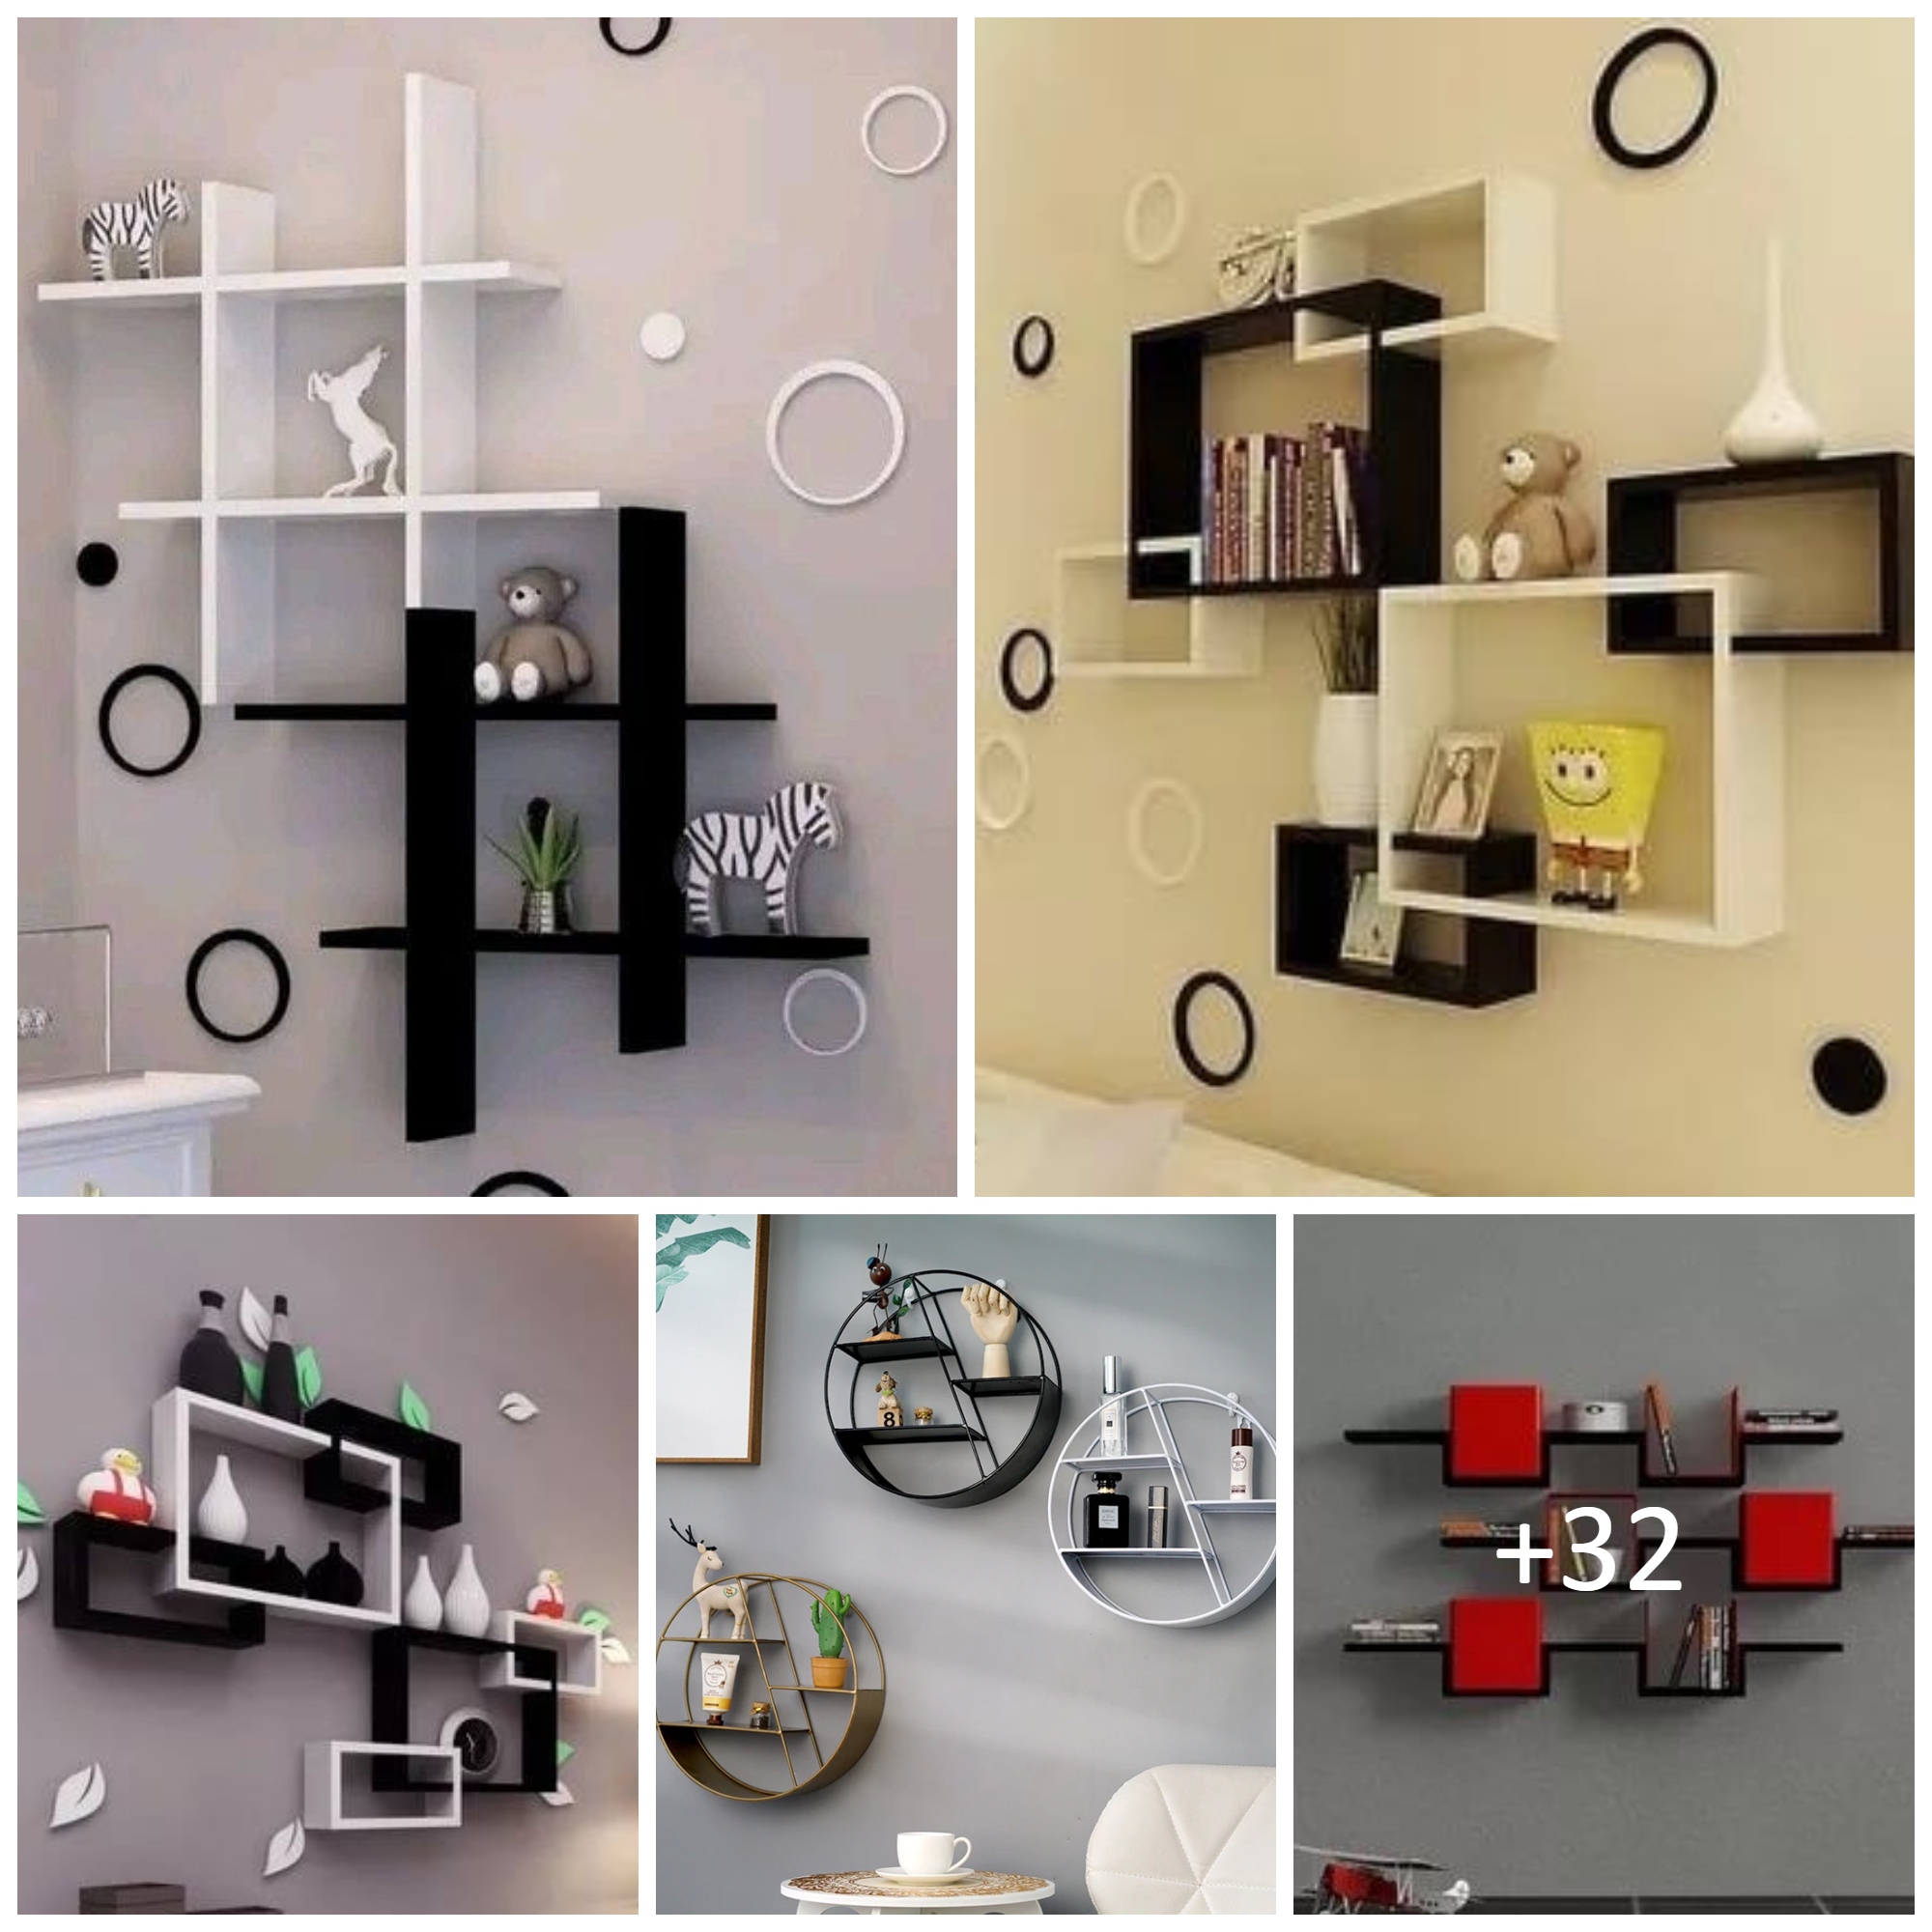 Ways to Use Decorative Wall Shelves